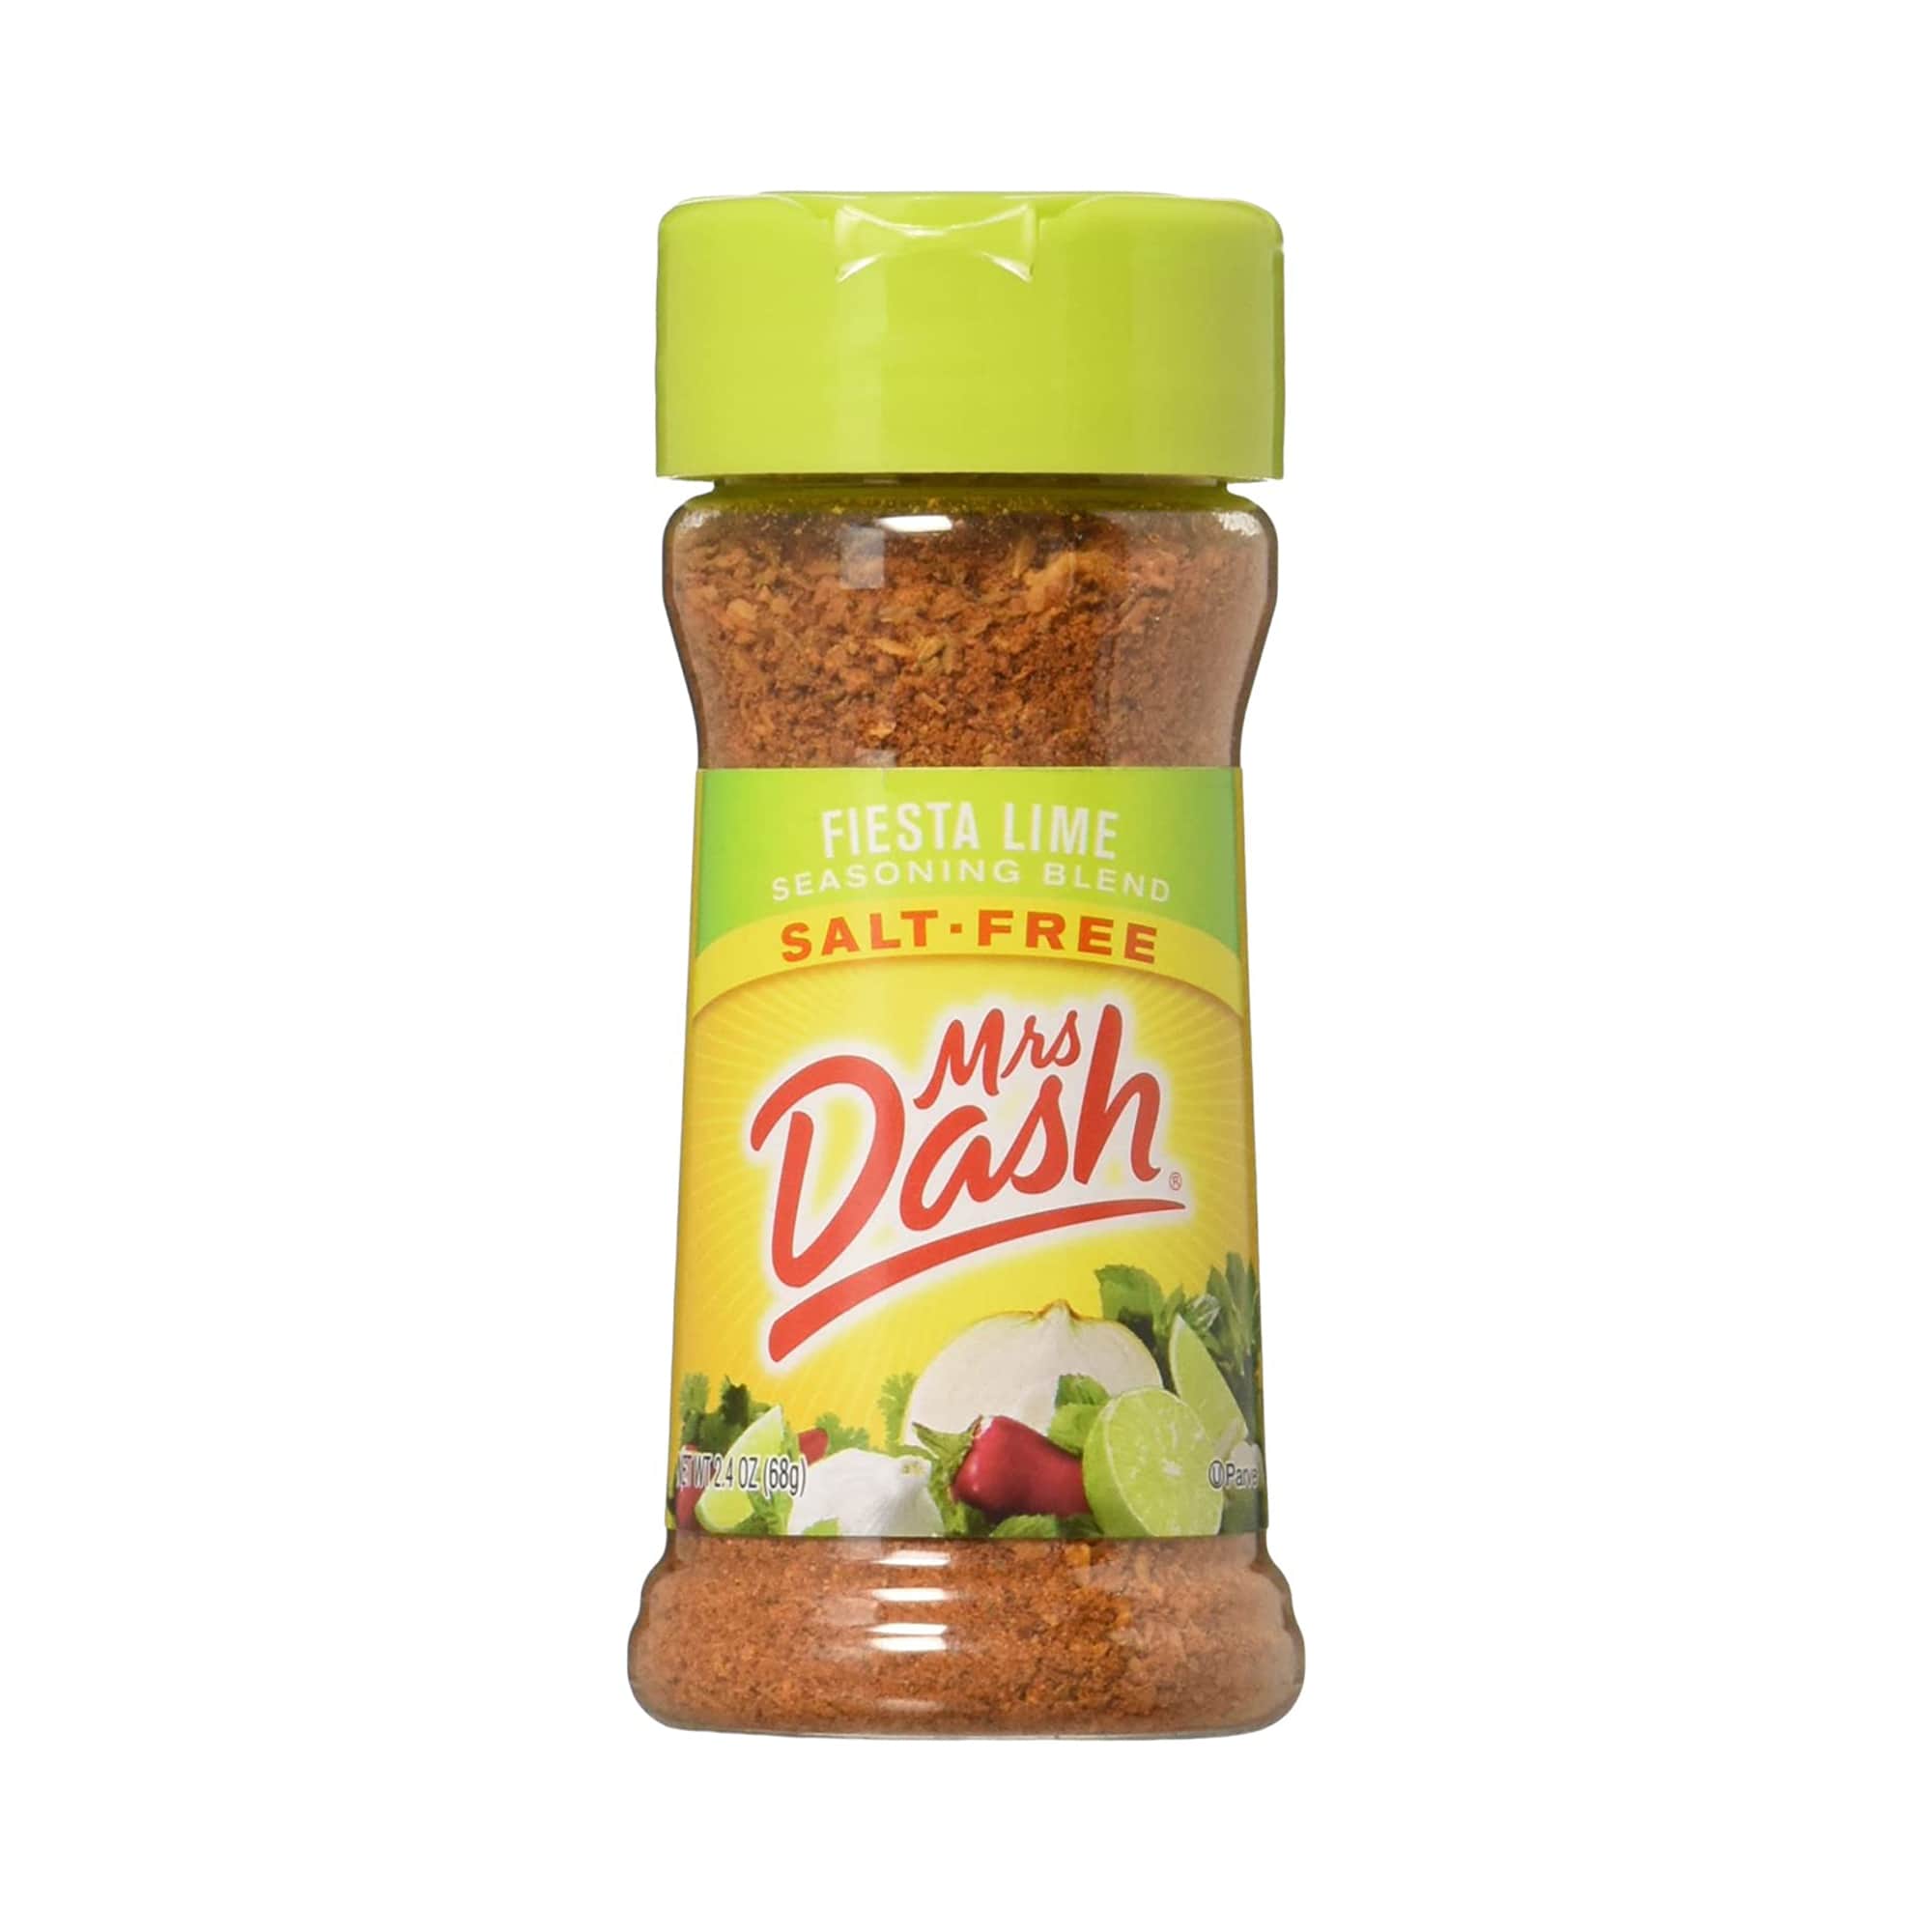 Dash Everything But the Salt Seasoning Blend, 2.6 oz - Foods Co.